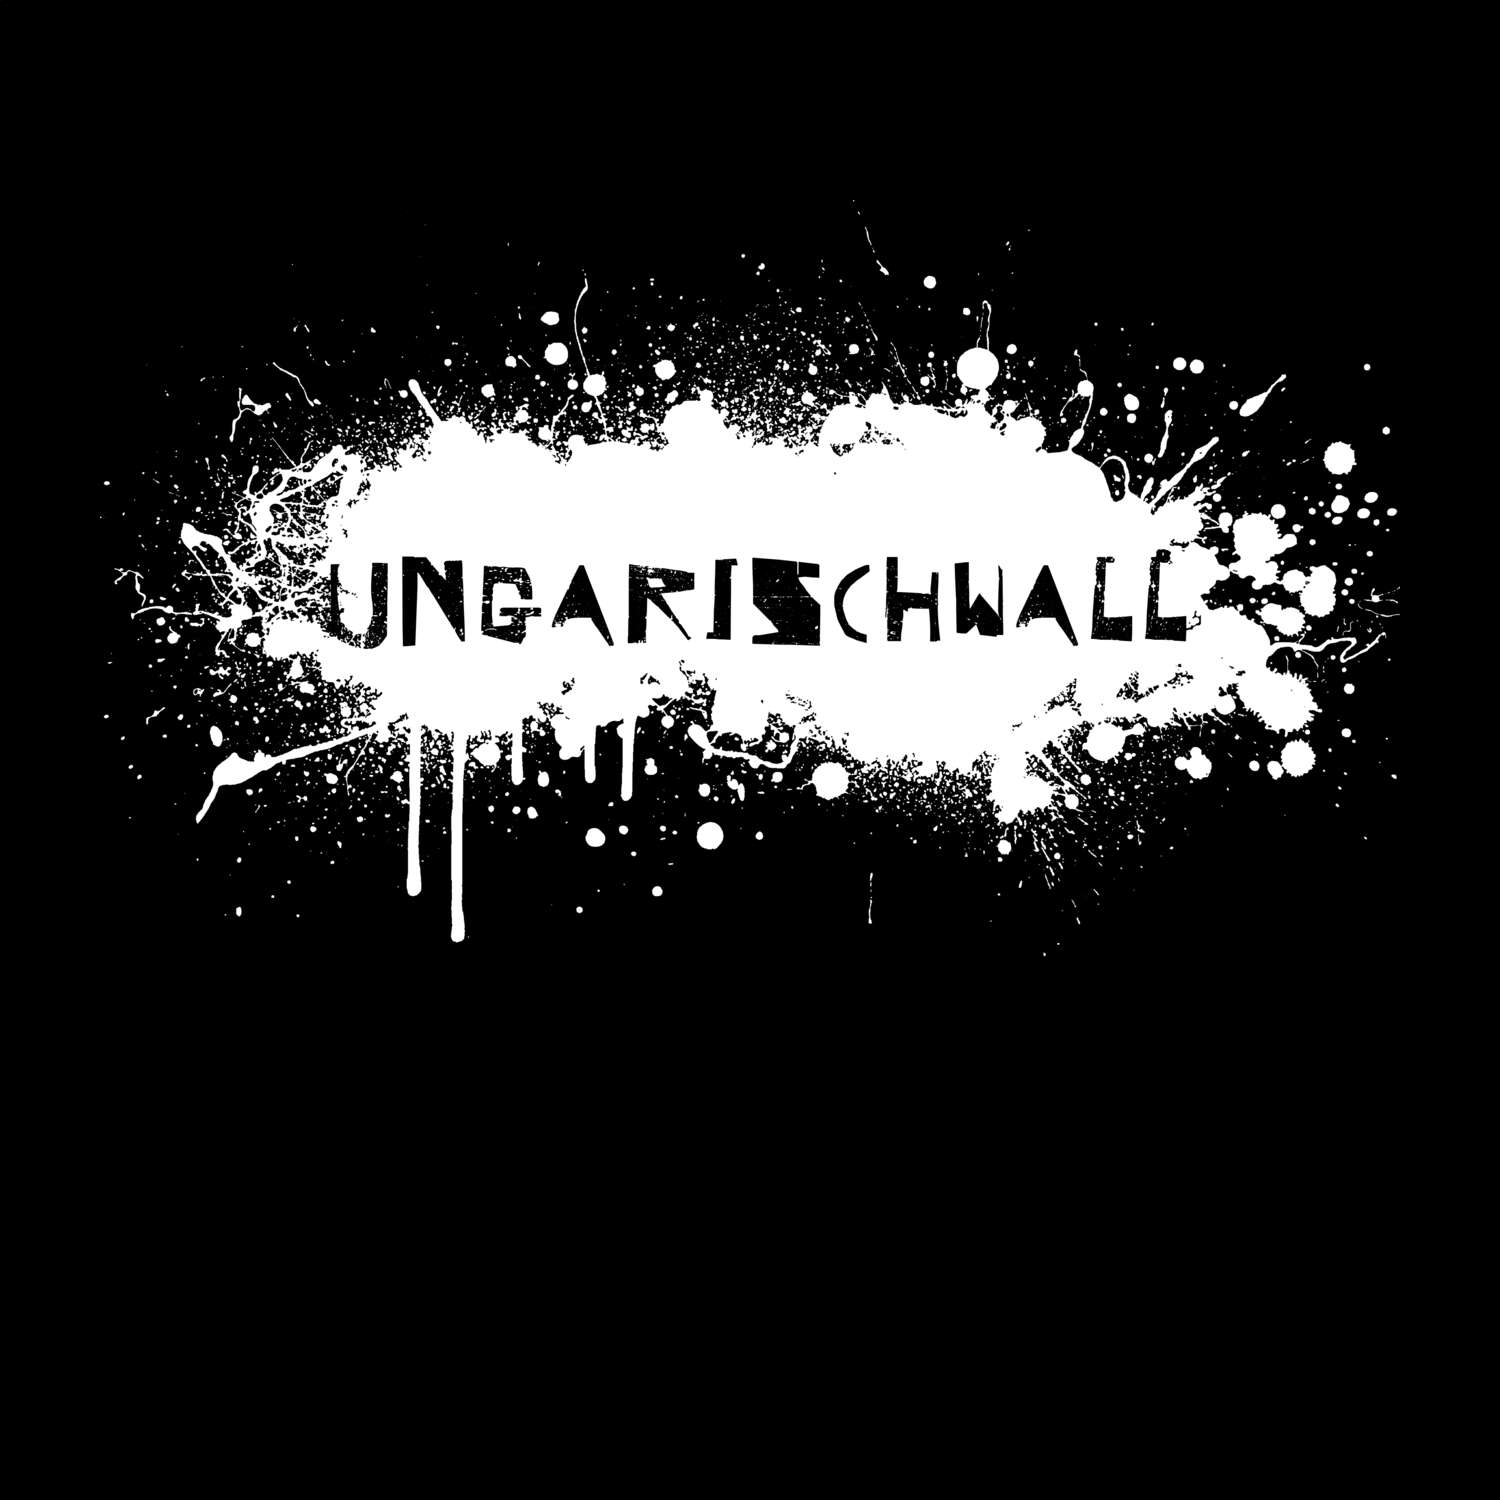 Ungarischwall T-Shirt »Paint Splash Punk«